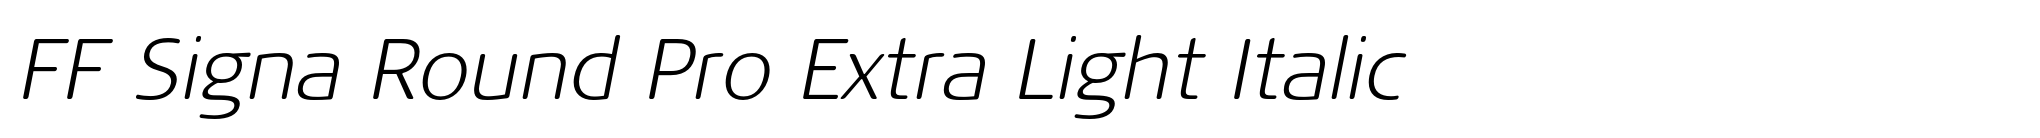 FF Signa Round Pro Extra Light Italic image